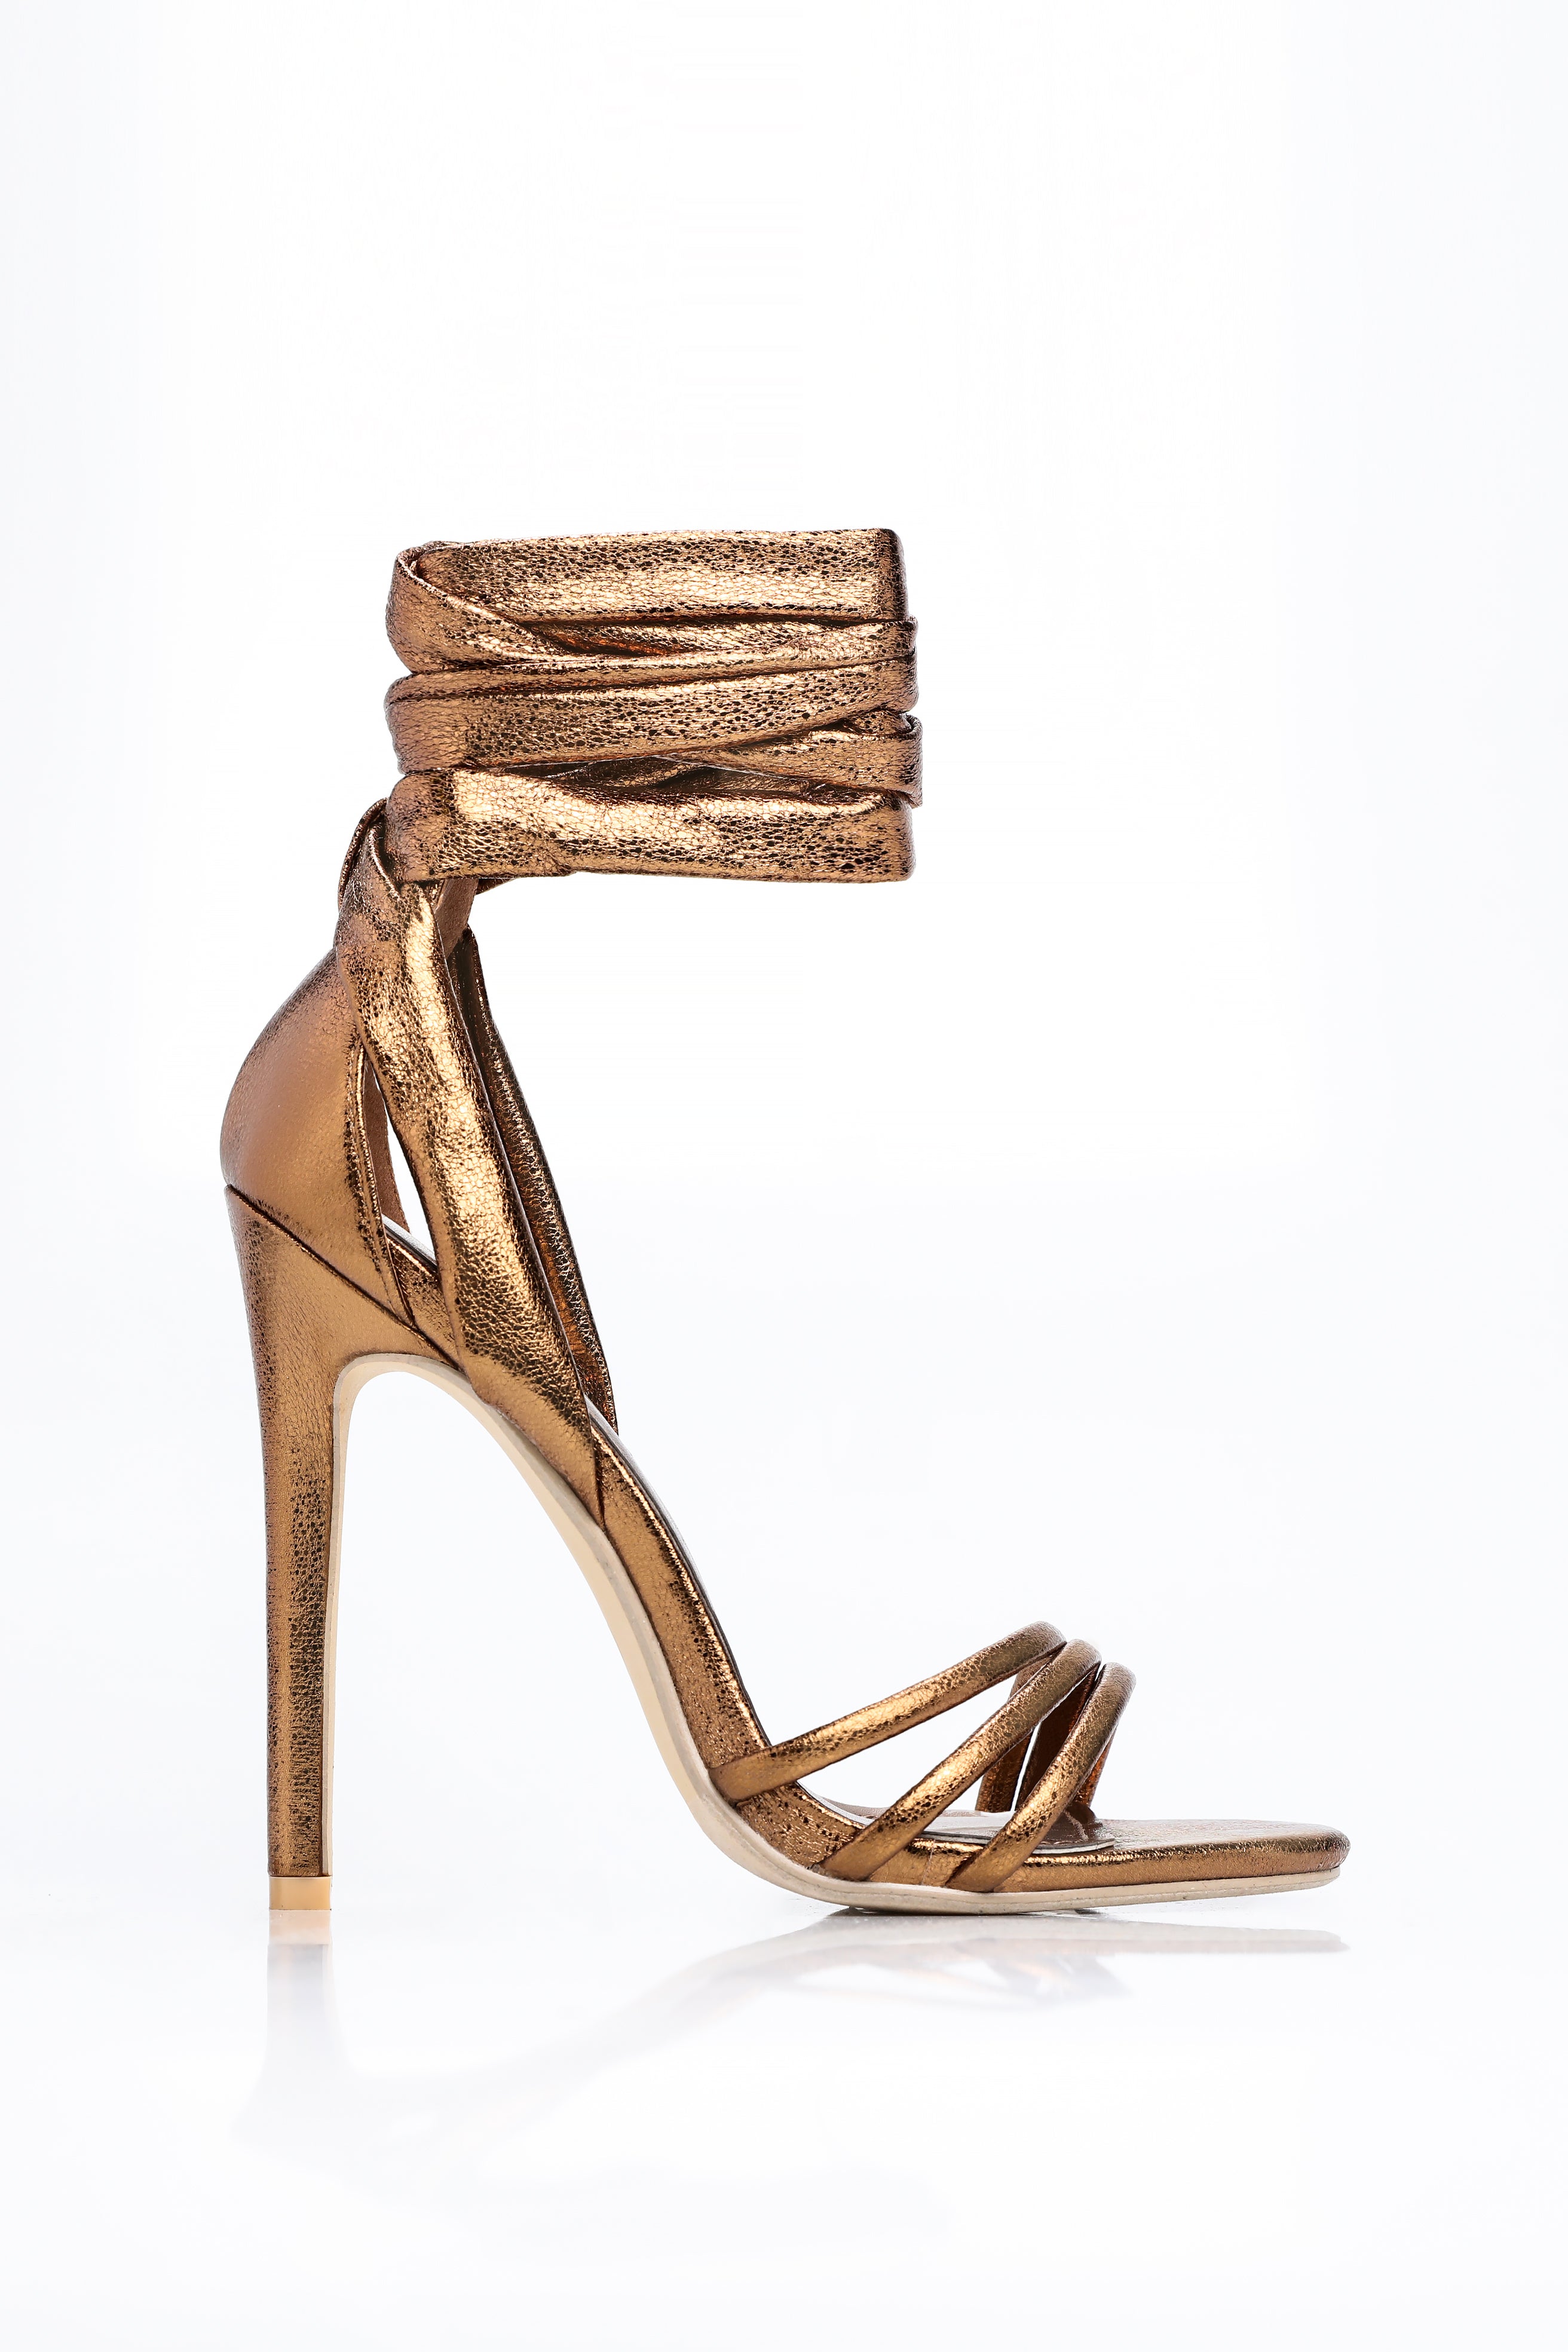 Metallic Strappy High-Heel Sandal | Banana Republic | Sandals heels,  Metallic strappy heels, Strappy high heels sandals